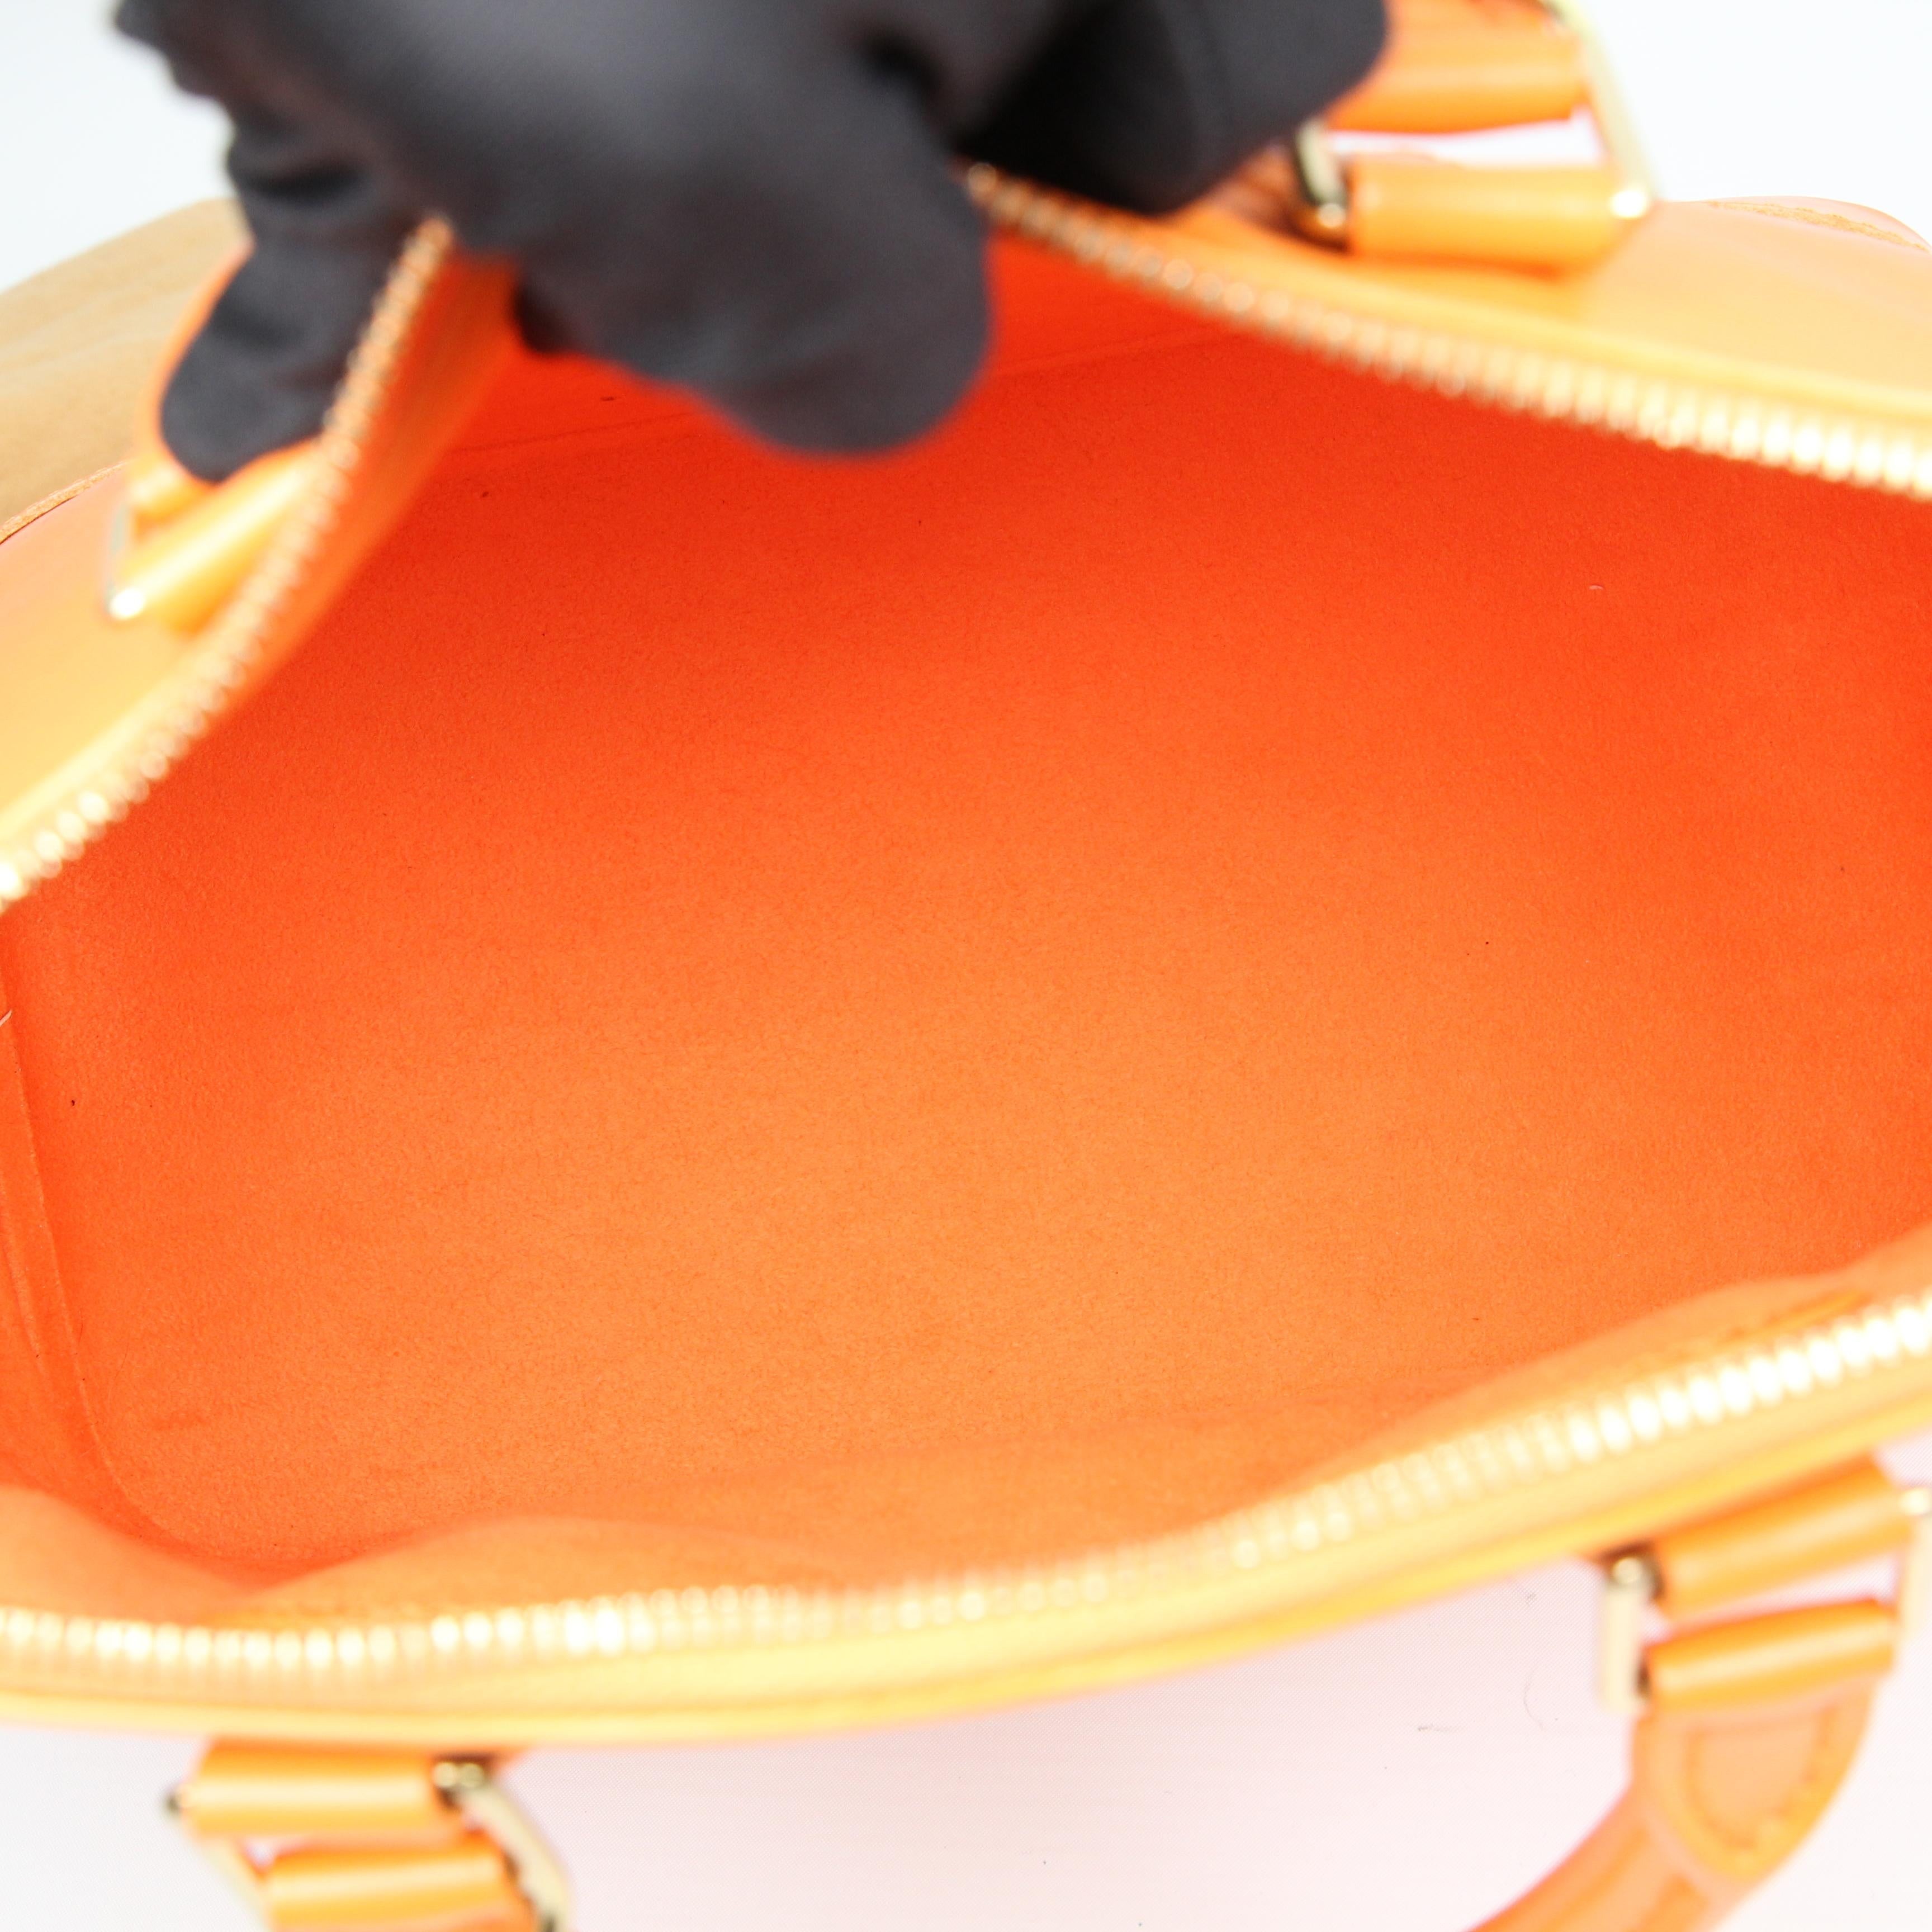 Louis Vuitton Alma leather handbag For Sale 8